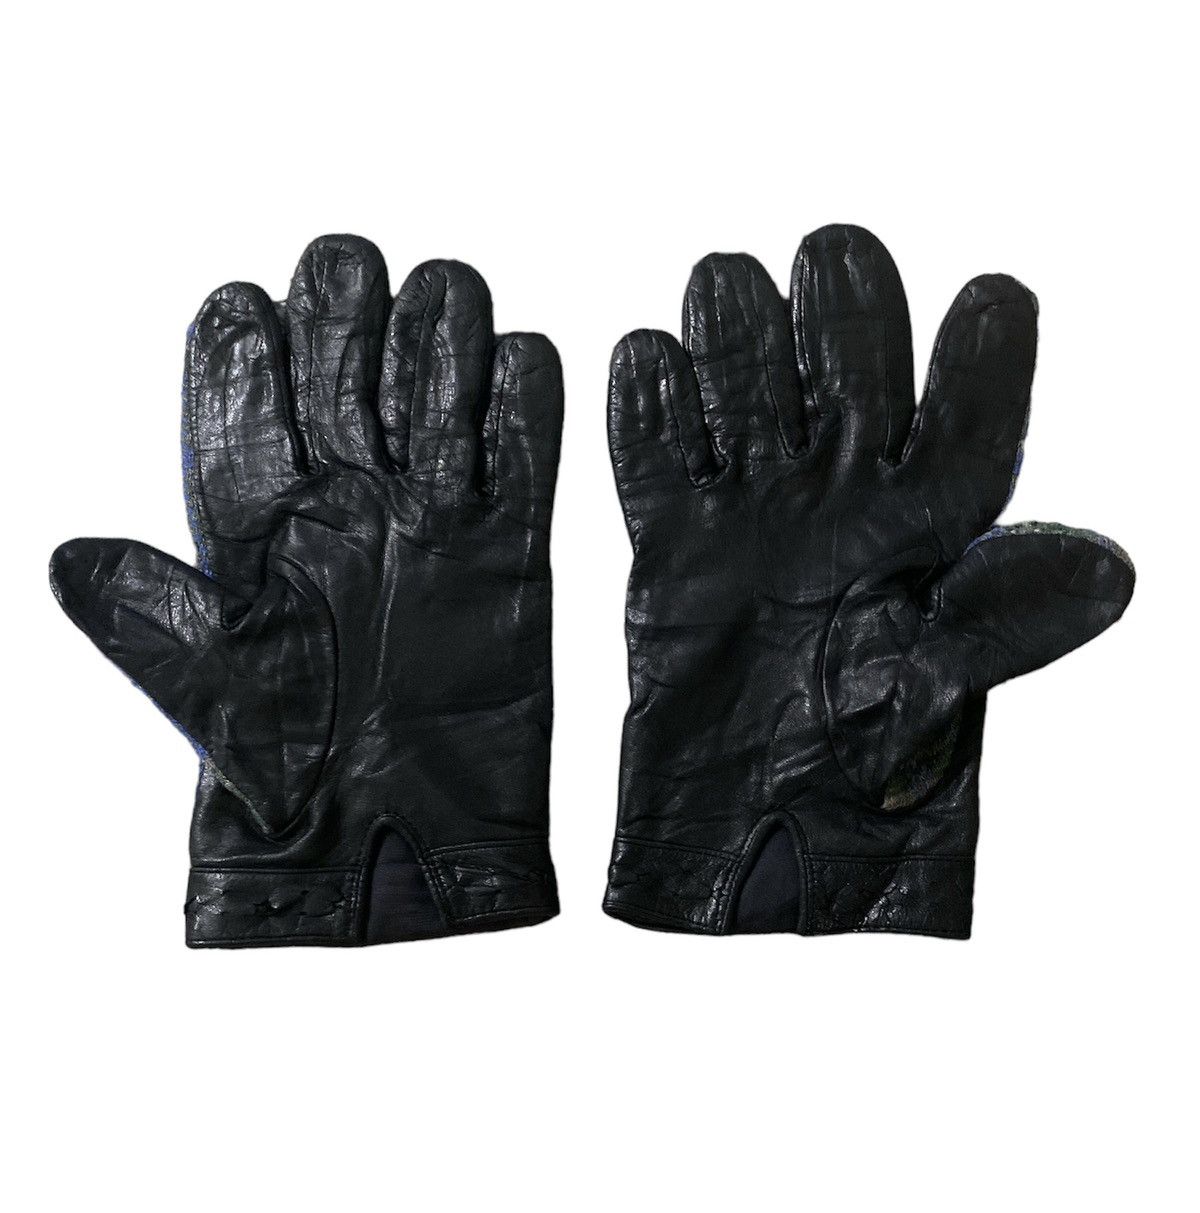 Vivienne Westwood Leather Gloves - 2